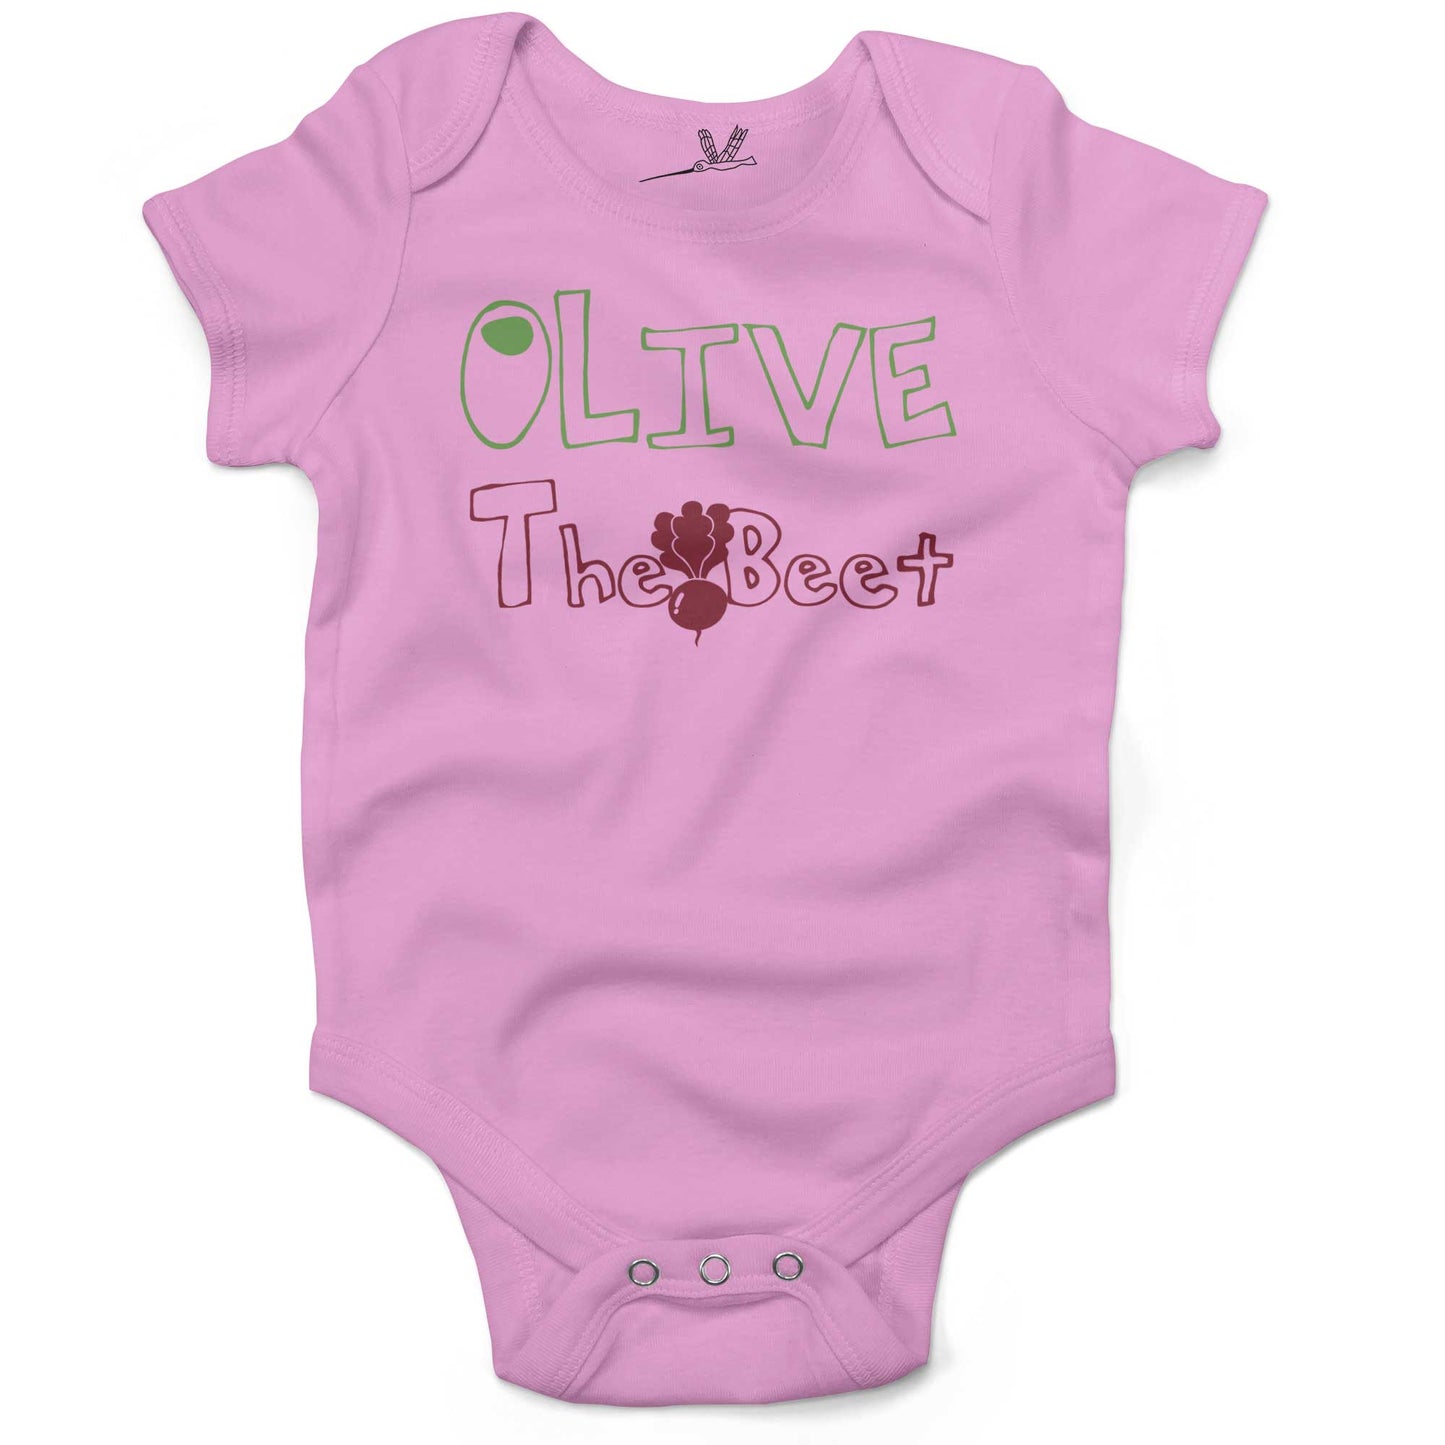 Olive The Beet Infant Bodysuit or Raglan Baby Tee-Organic Pink-3-6 months